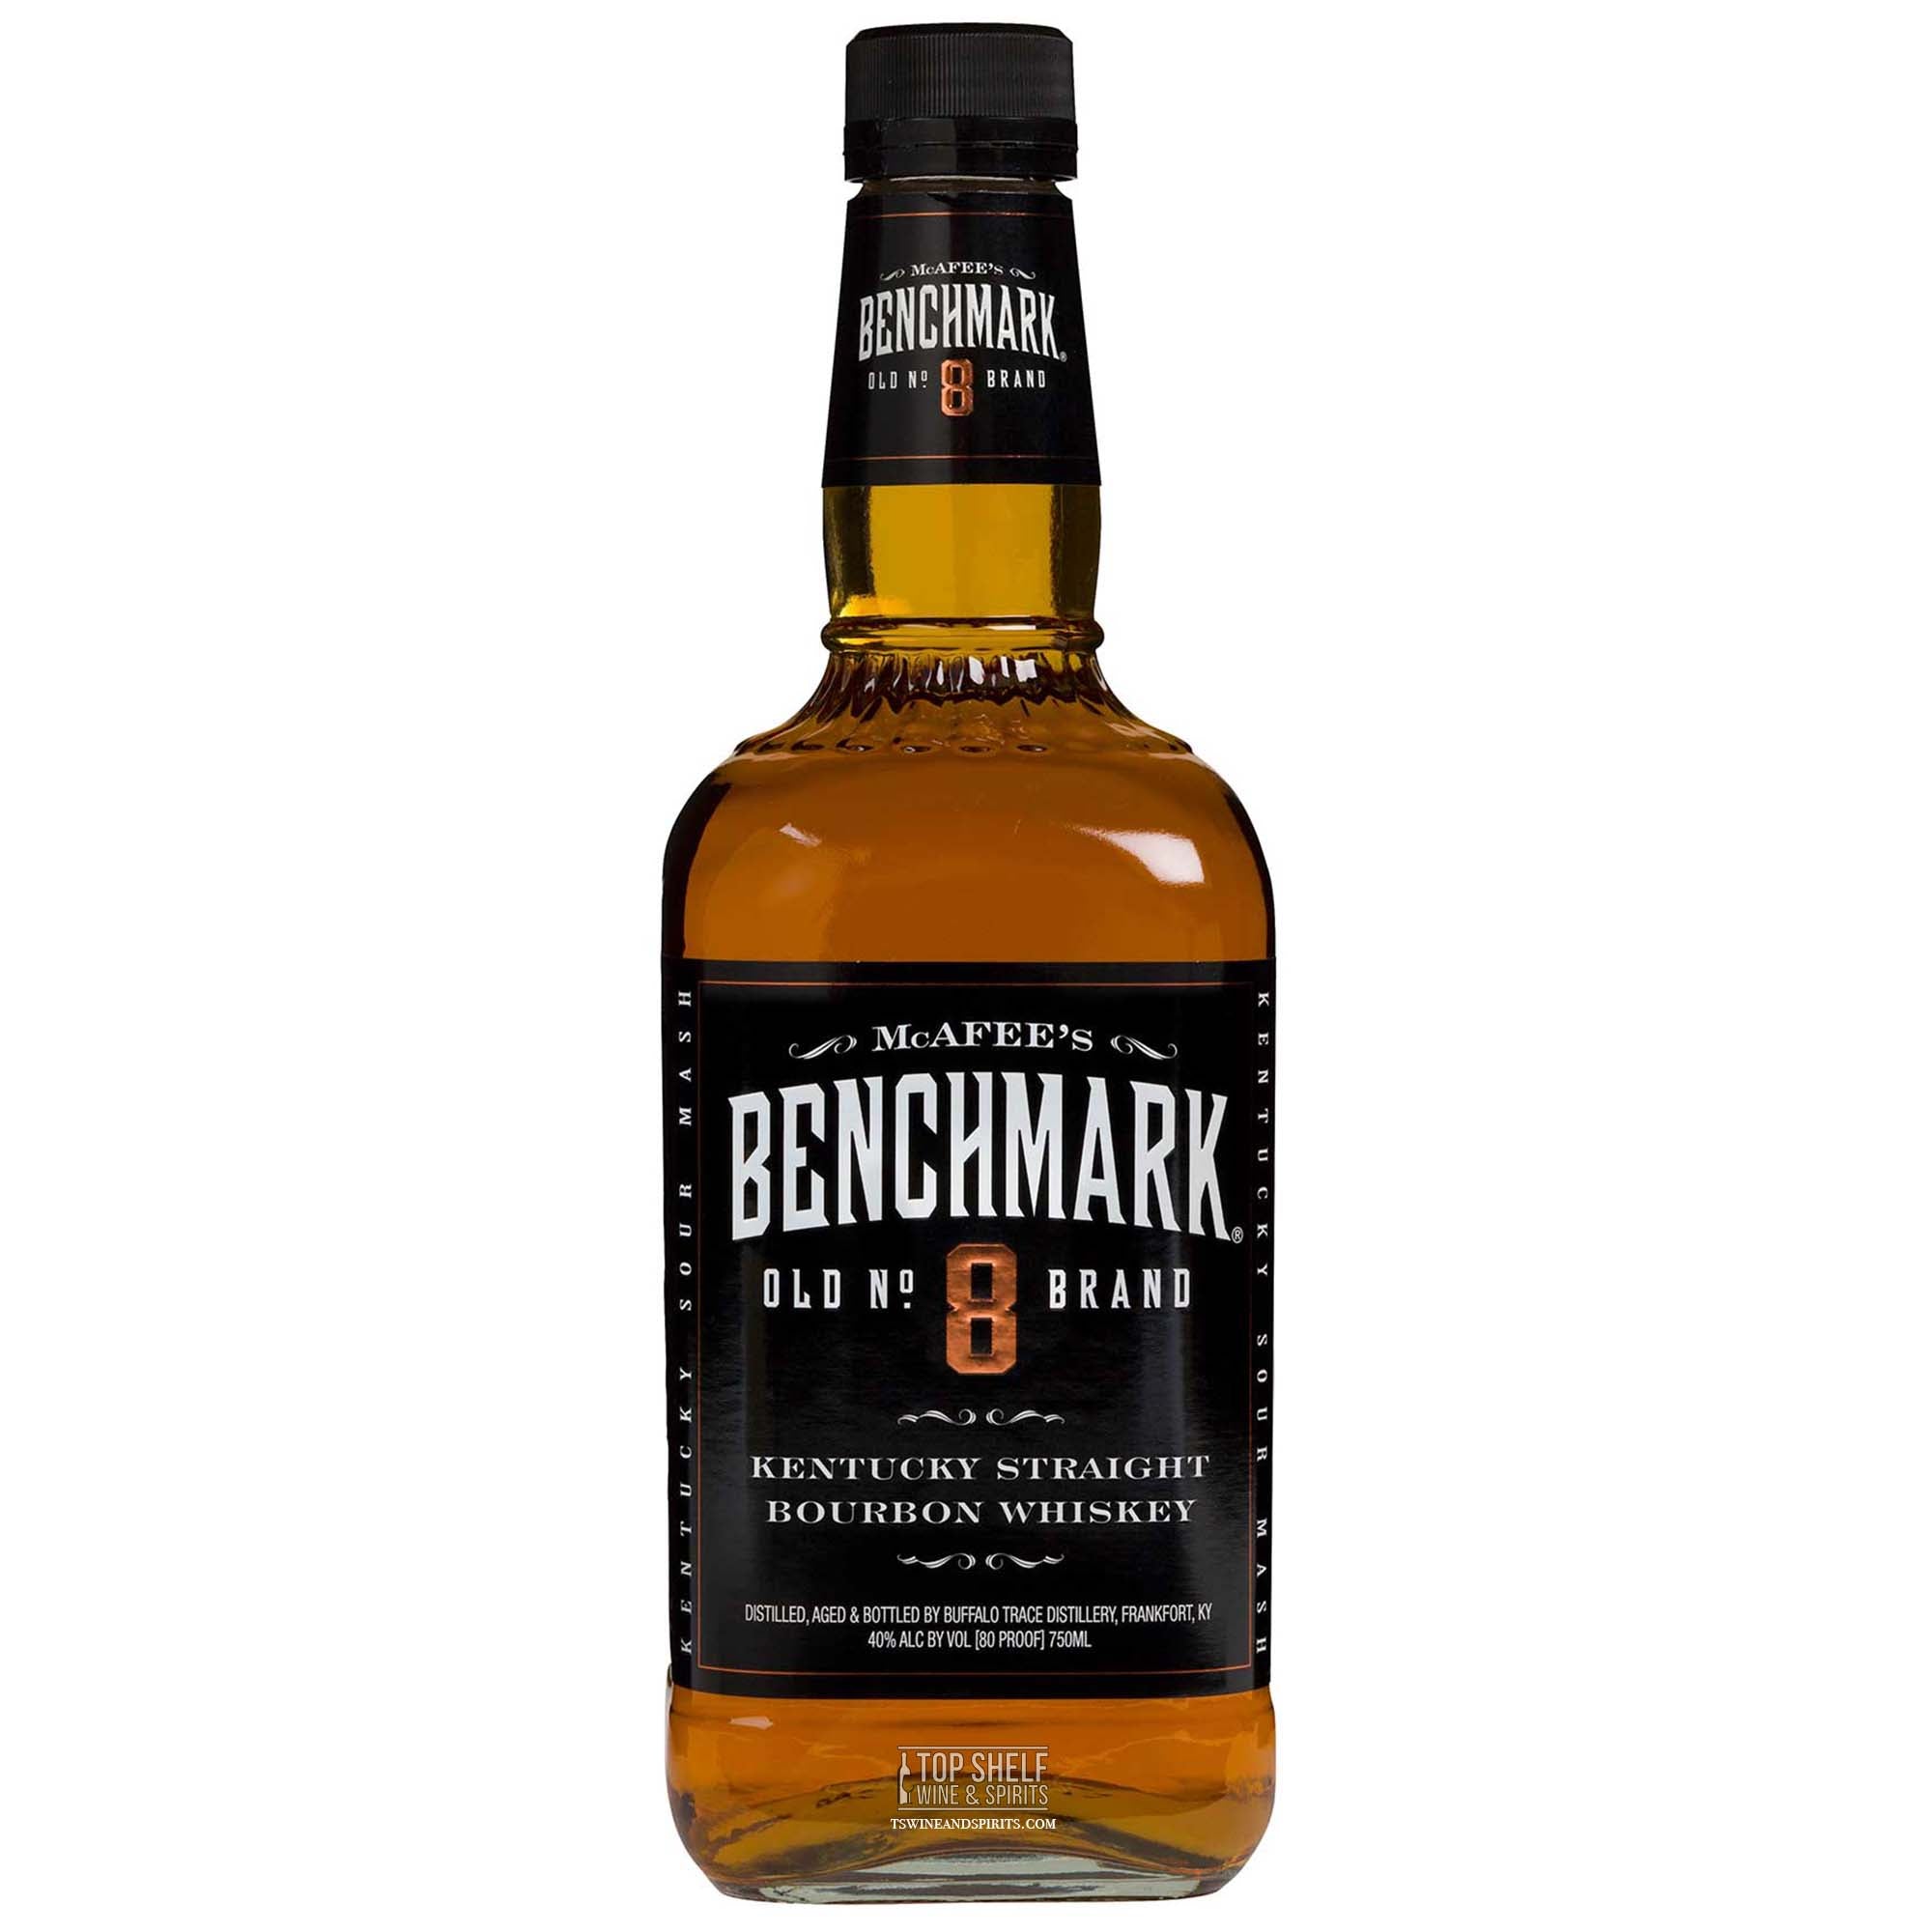 Benchmark Bourbon Old No. 8